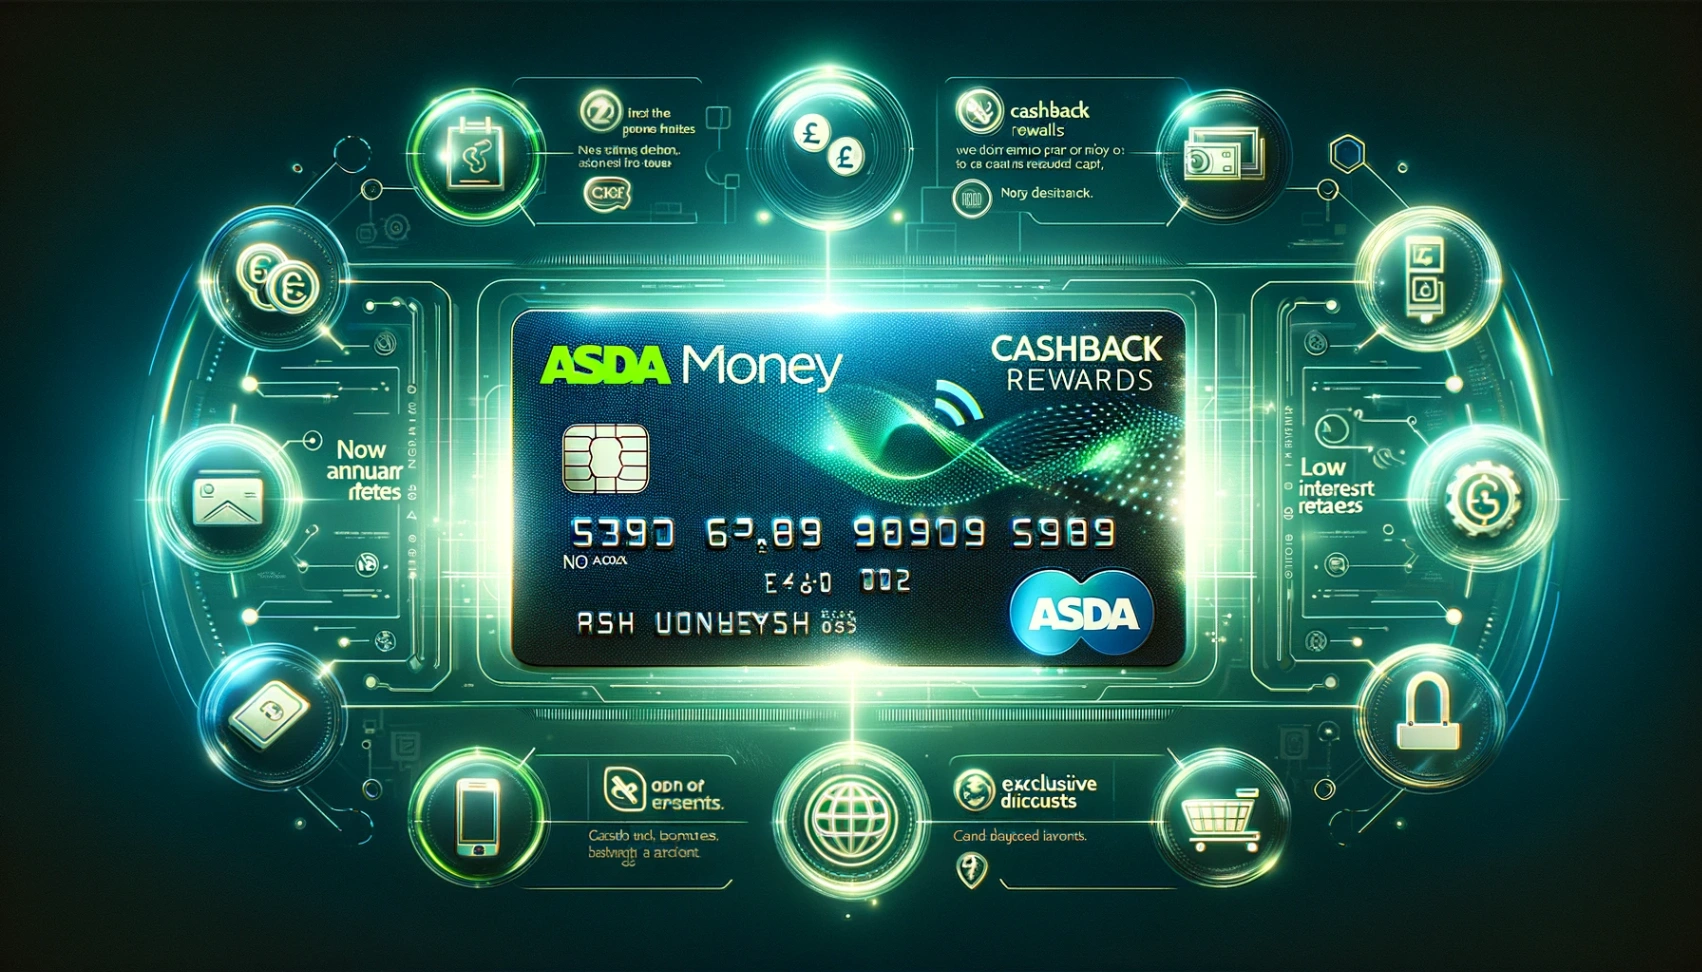 Asda Money Cashback Credit Card - How to Apply